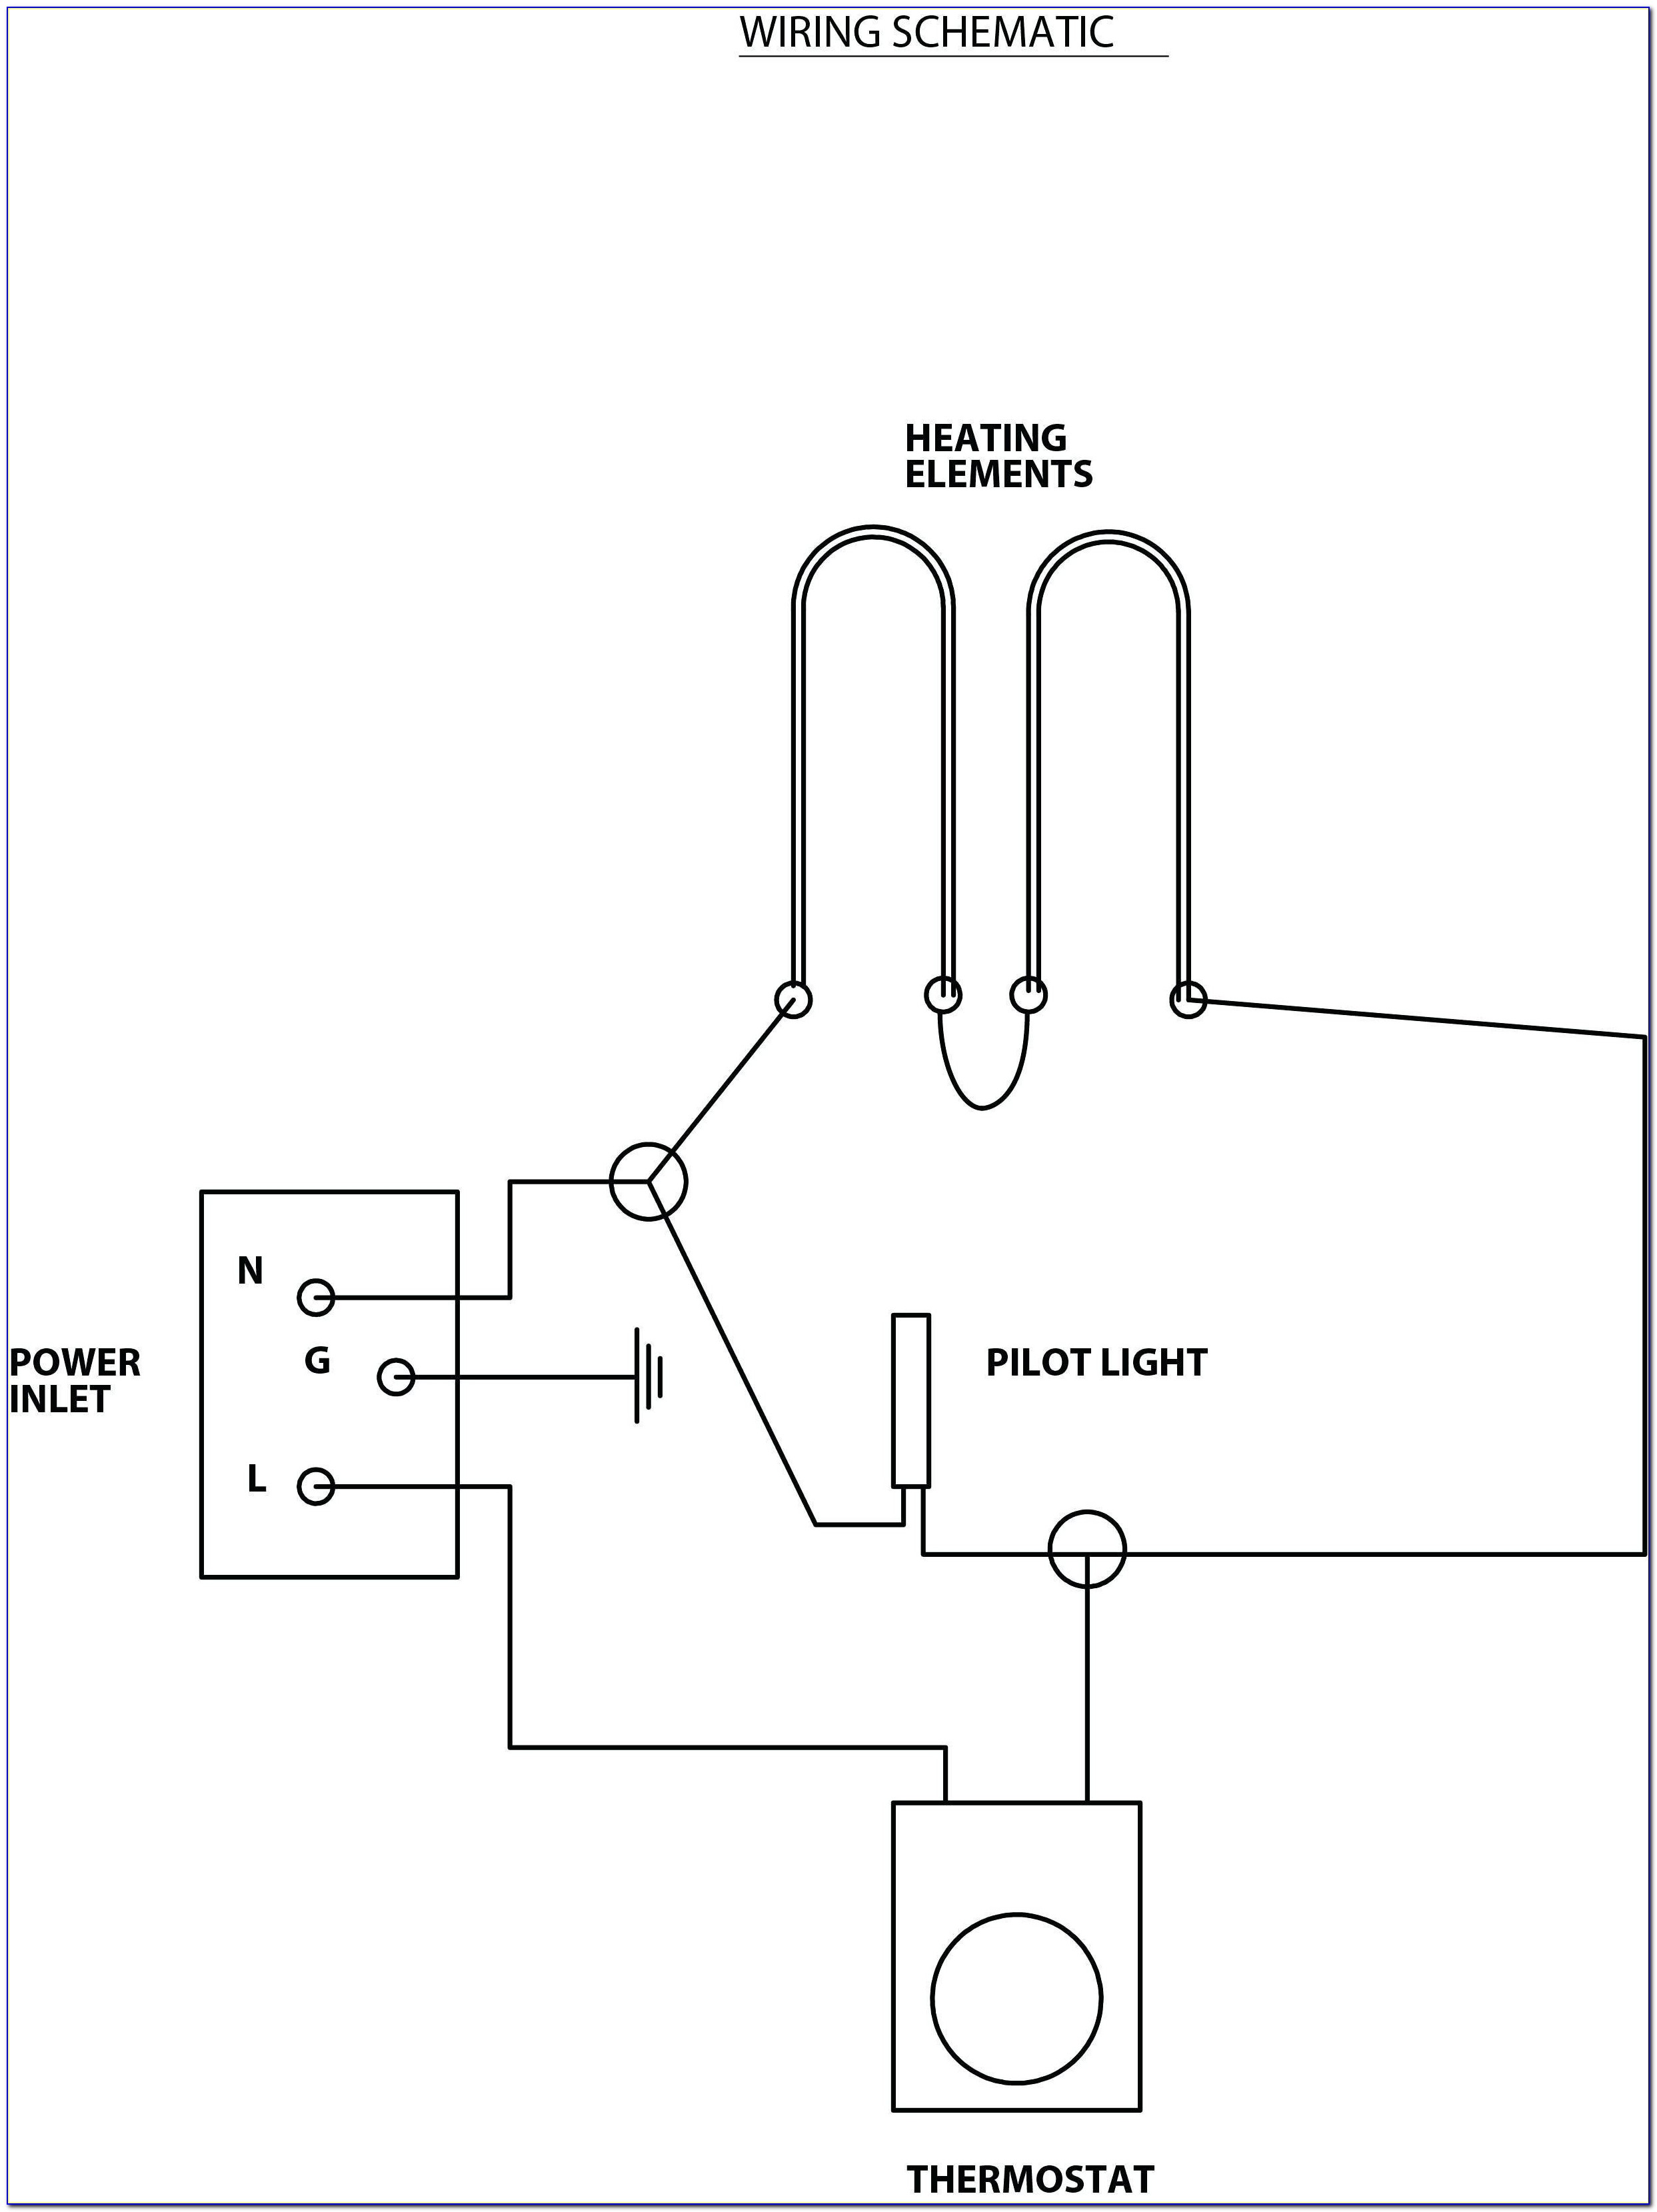 Marley Md26 Thermostat Wiring Diagram